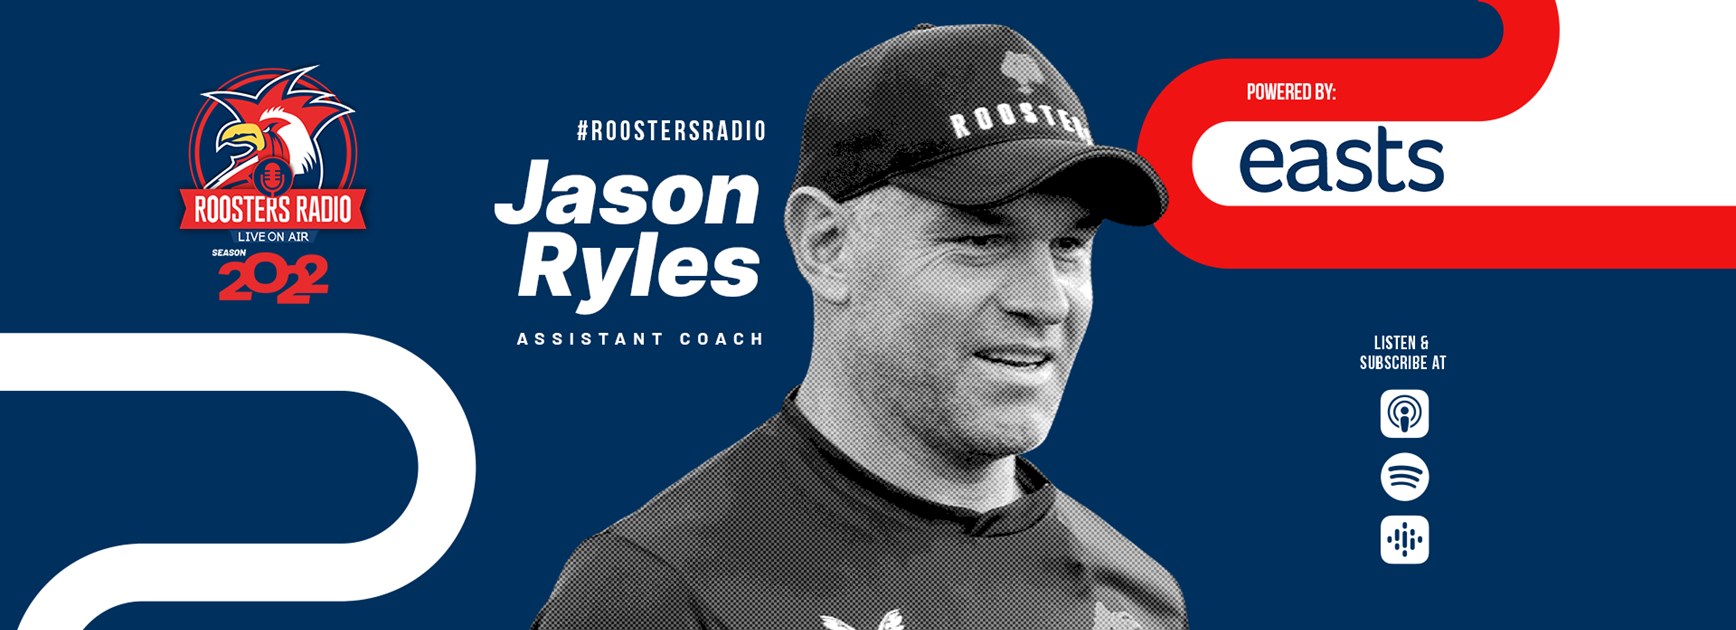 Roosters Radio Ep 125: Jason Ryles